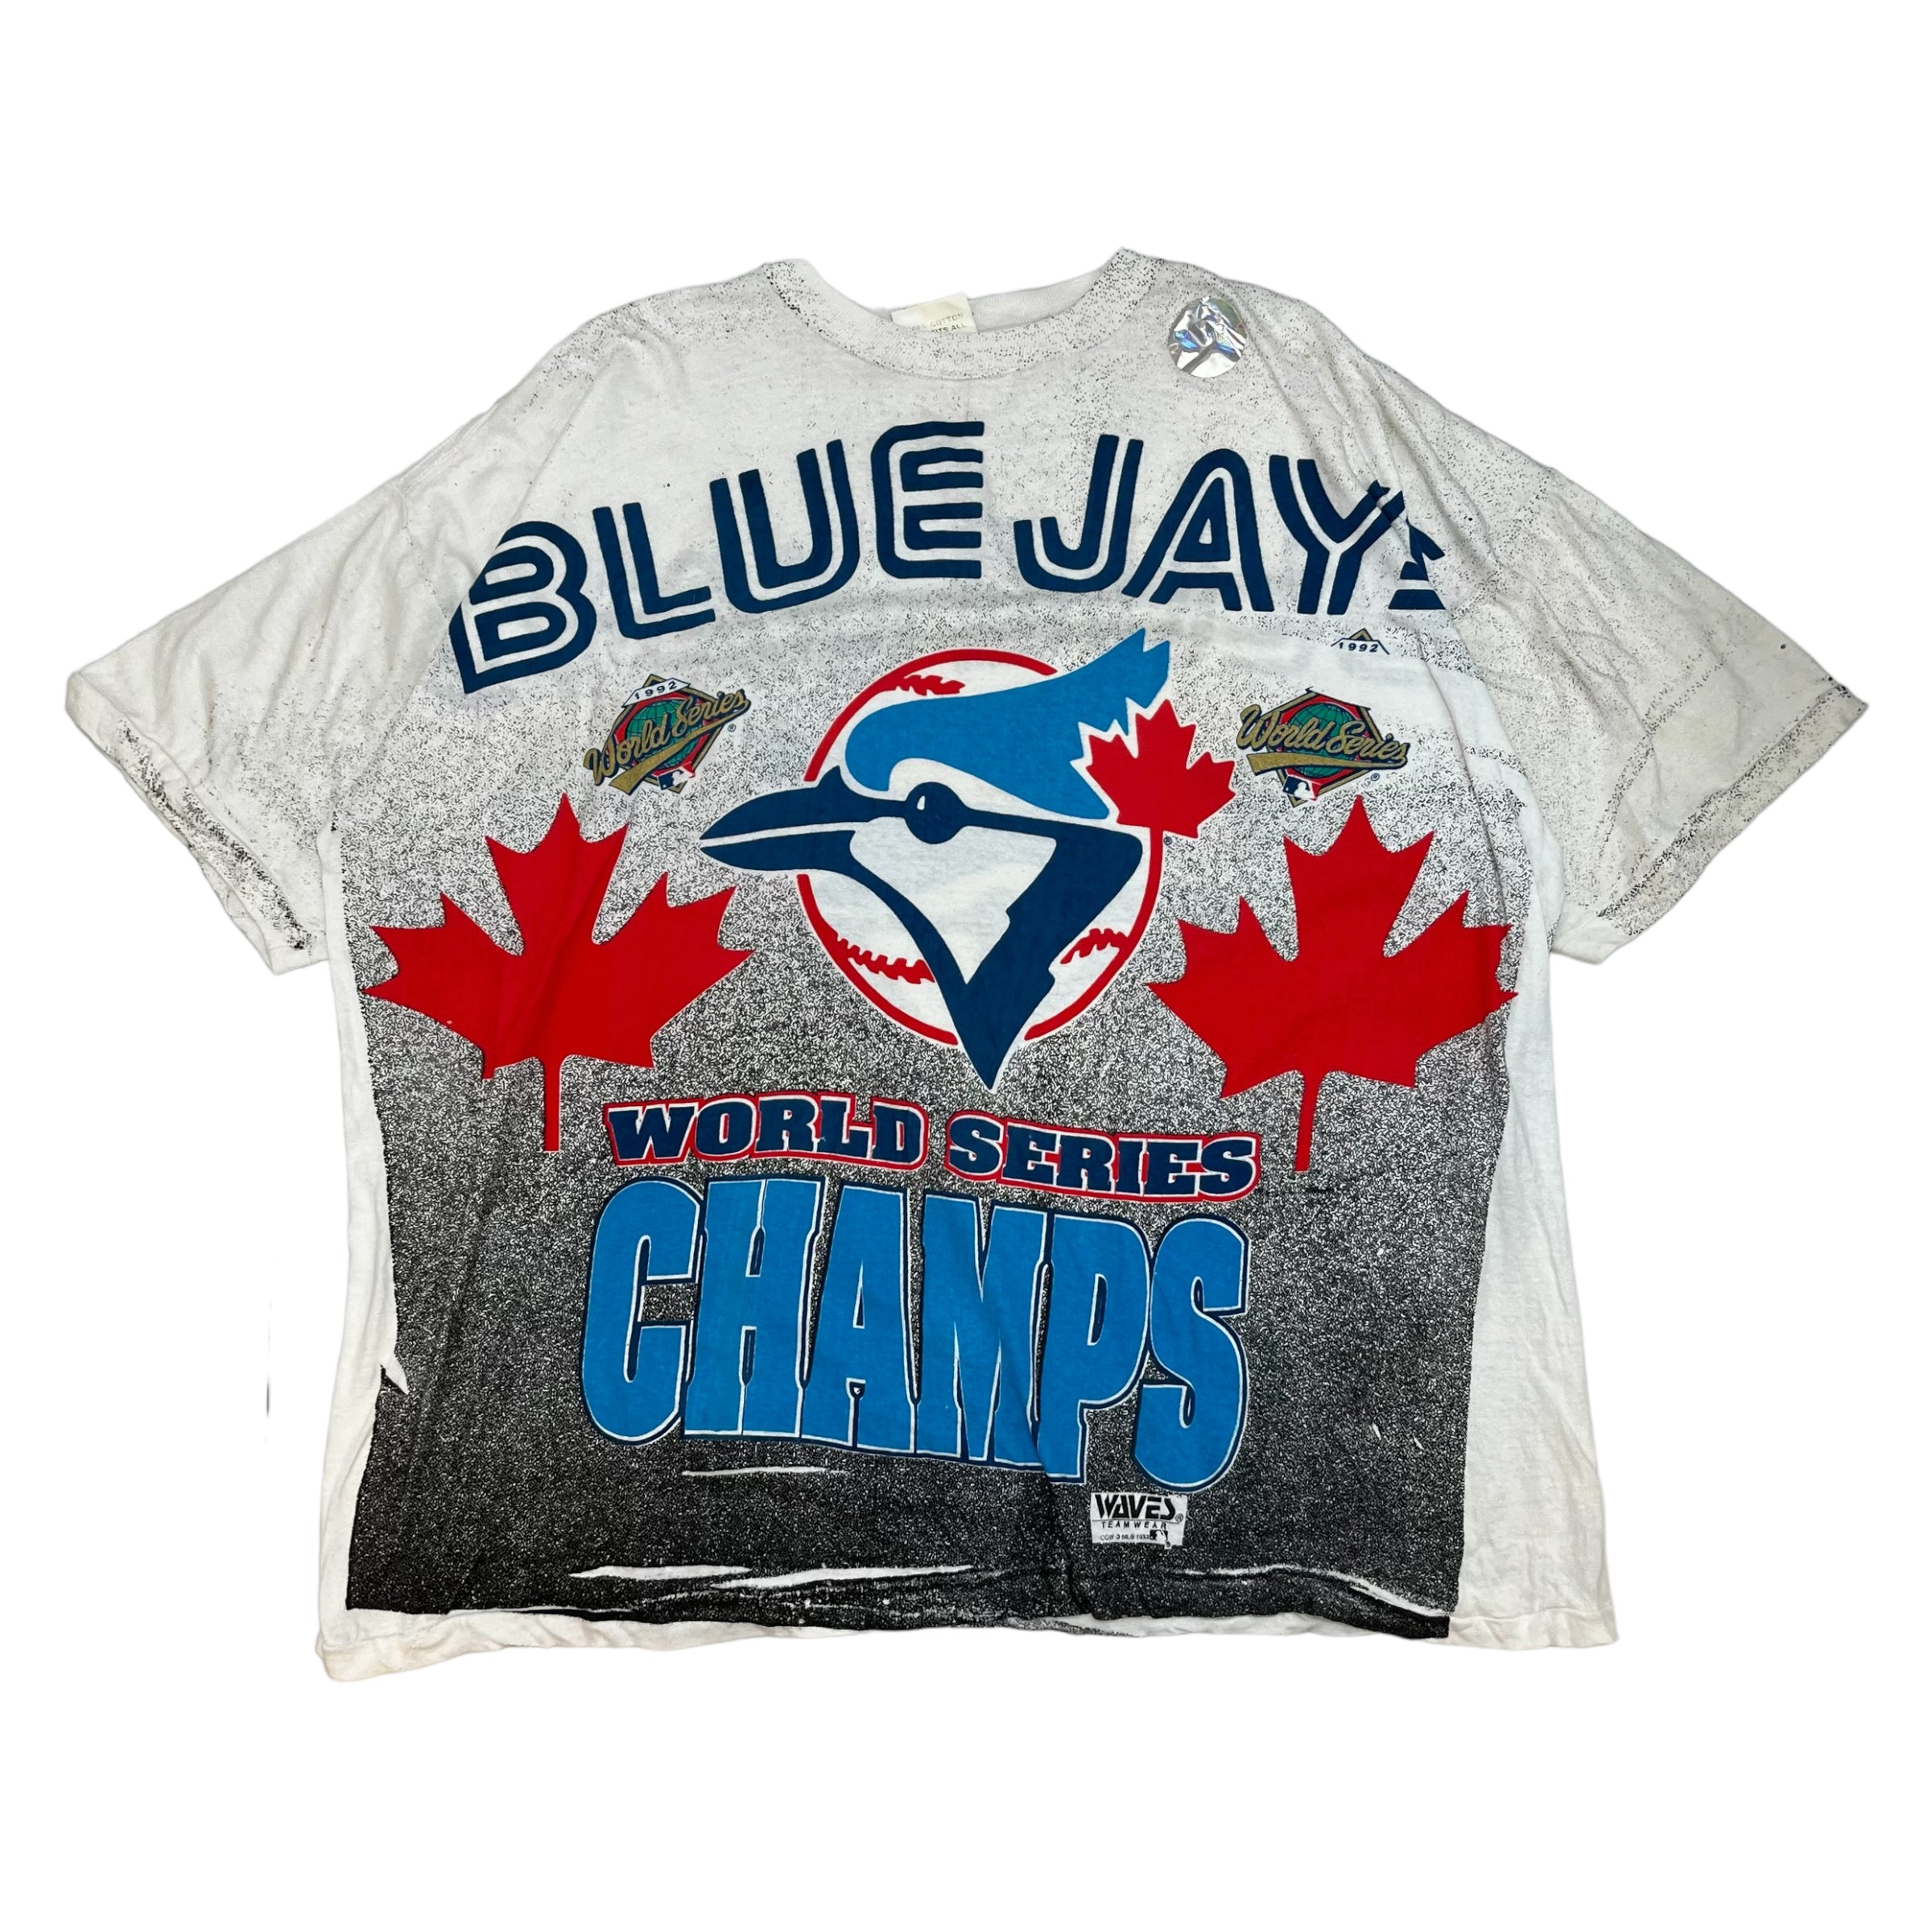 1992 Toronto Blue Jays Champs Tee White